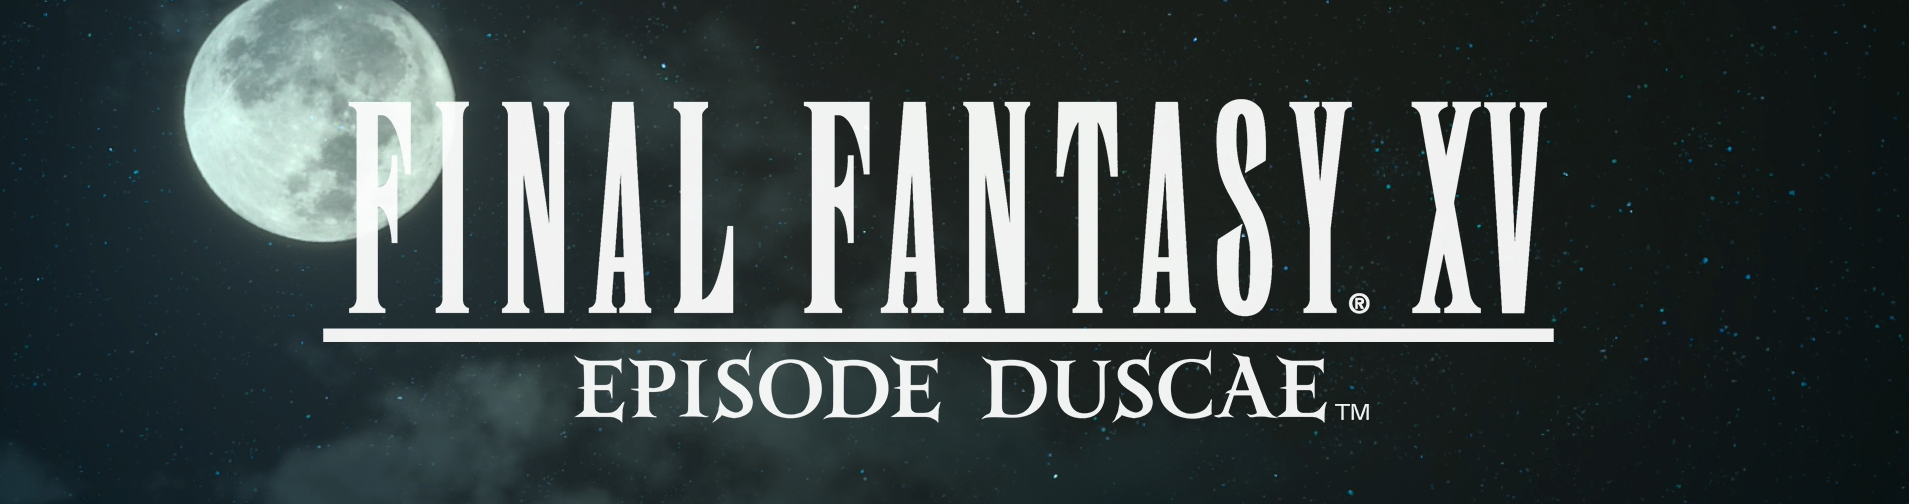 Final Fantasy XV: Episode Duscae Demo Impressions